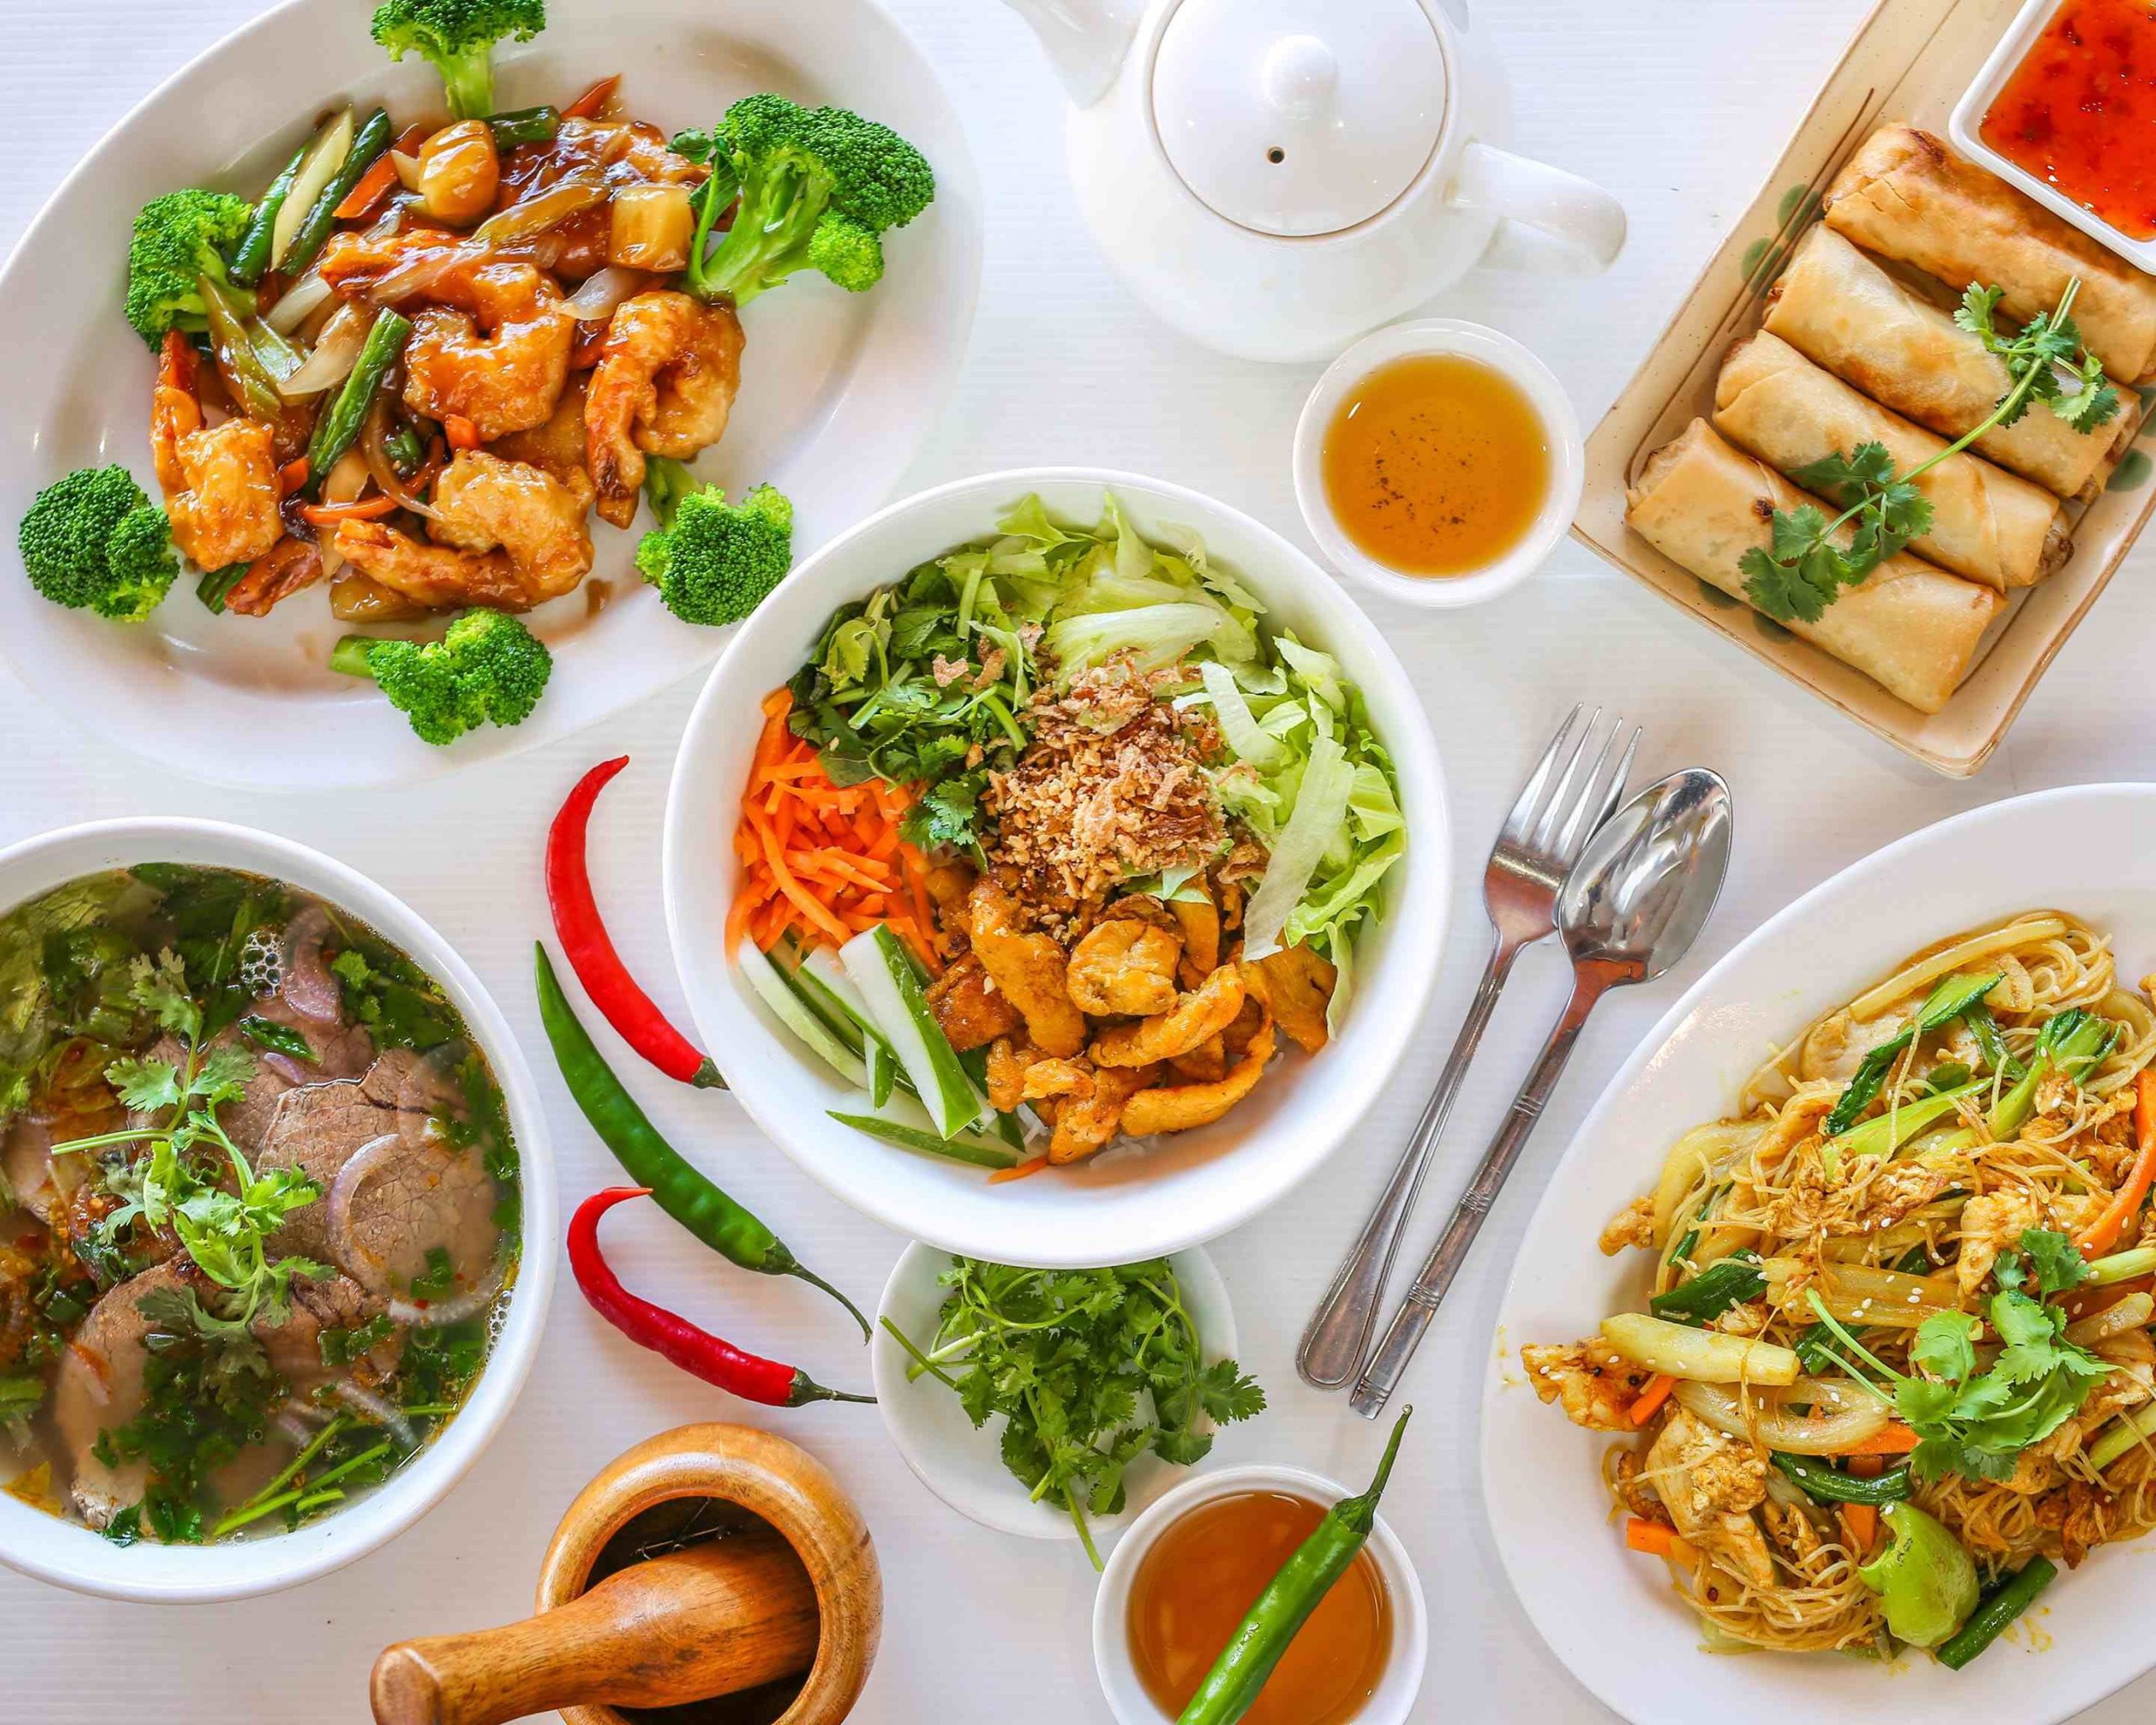 Springwood Garden Vietnamese & Chinese Cuisine